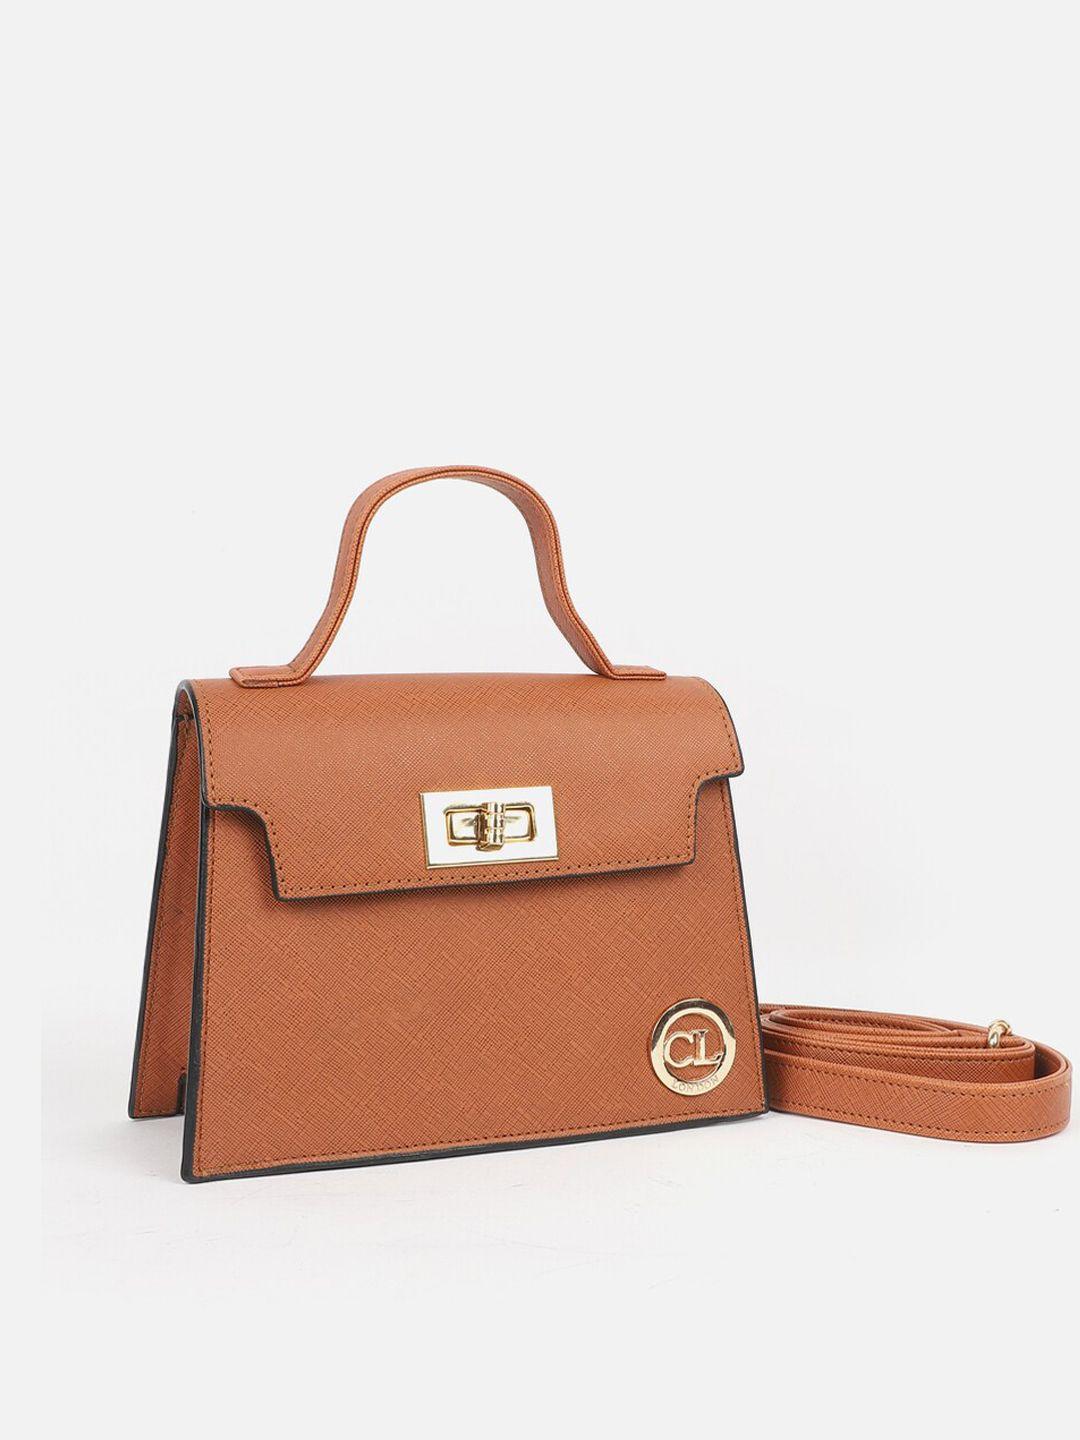 carlton london textured structured satchel bag